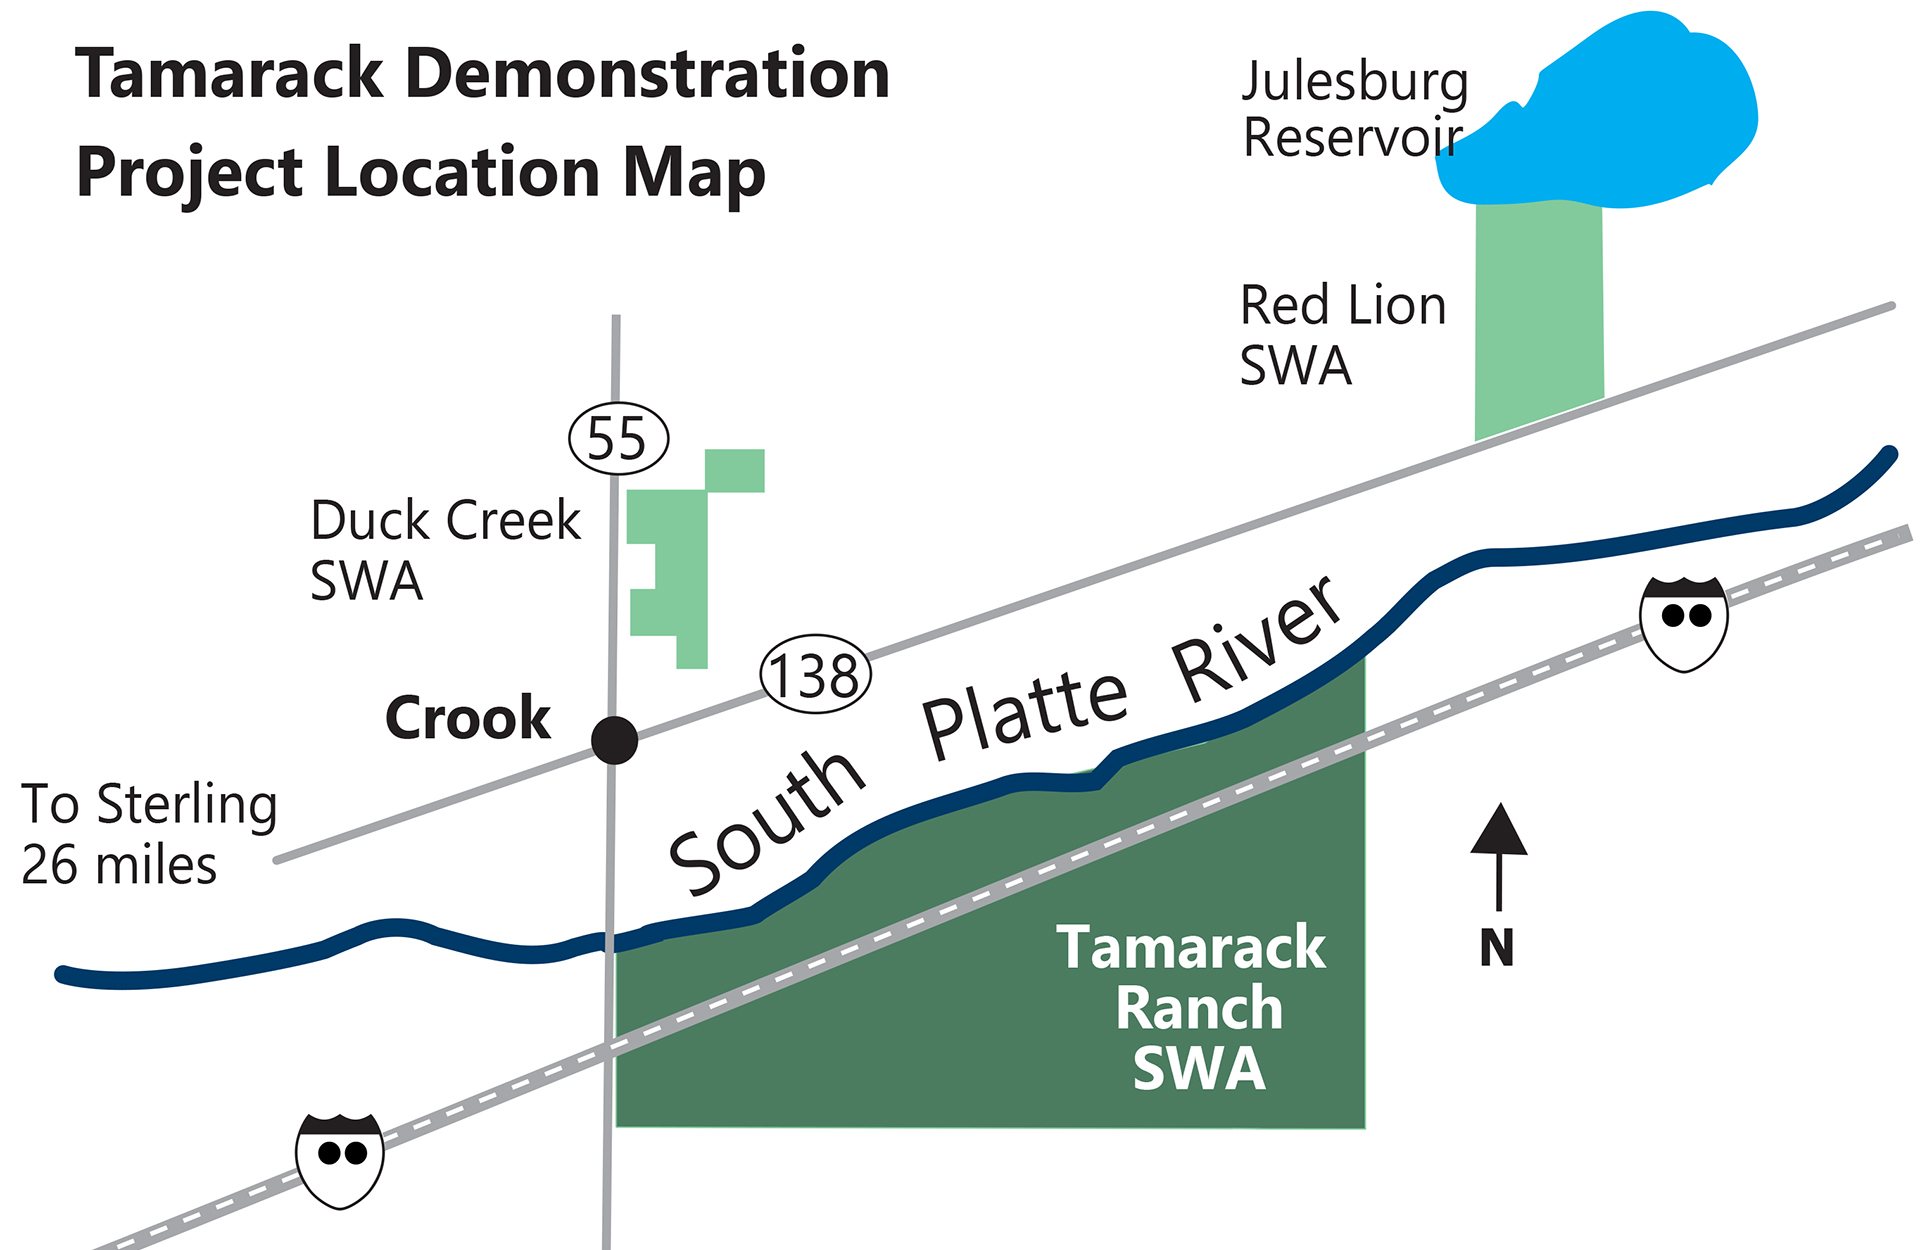 Tamarack Demonstration Project Location Map.